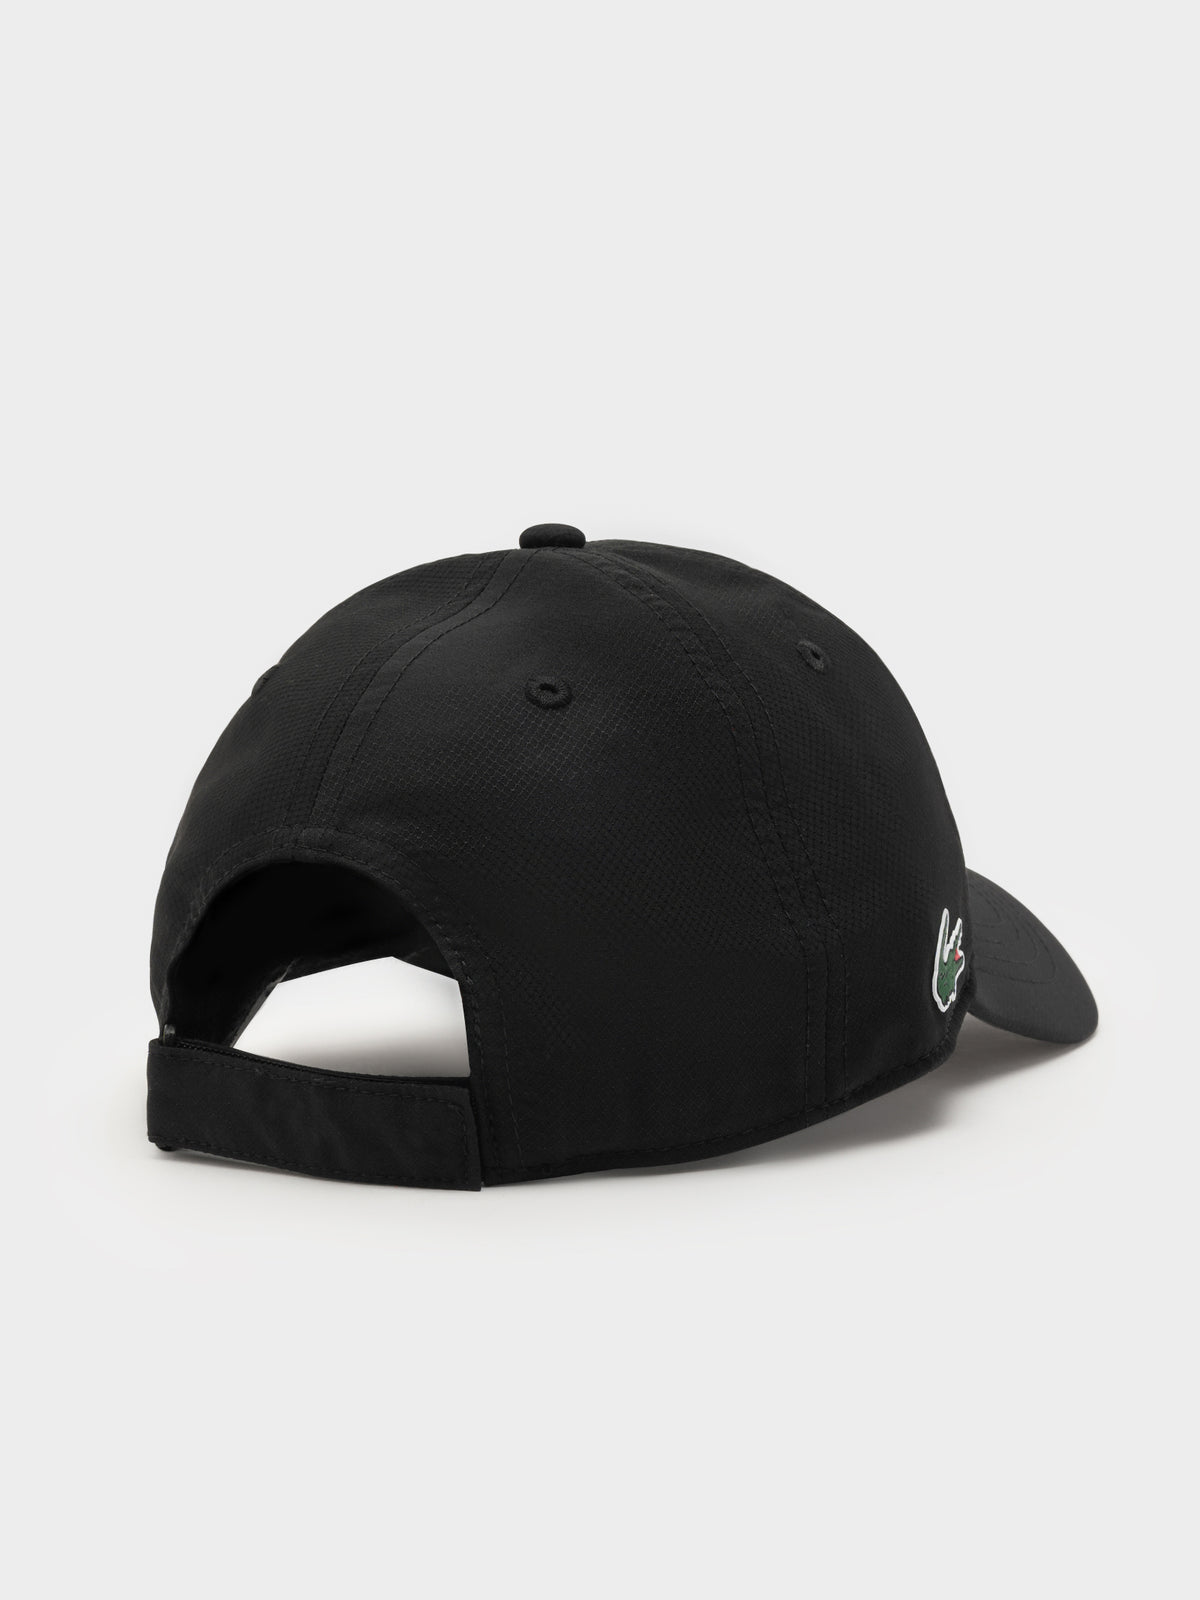 Basic Sport Dry Fit Cap in Black